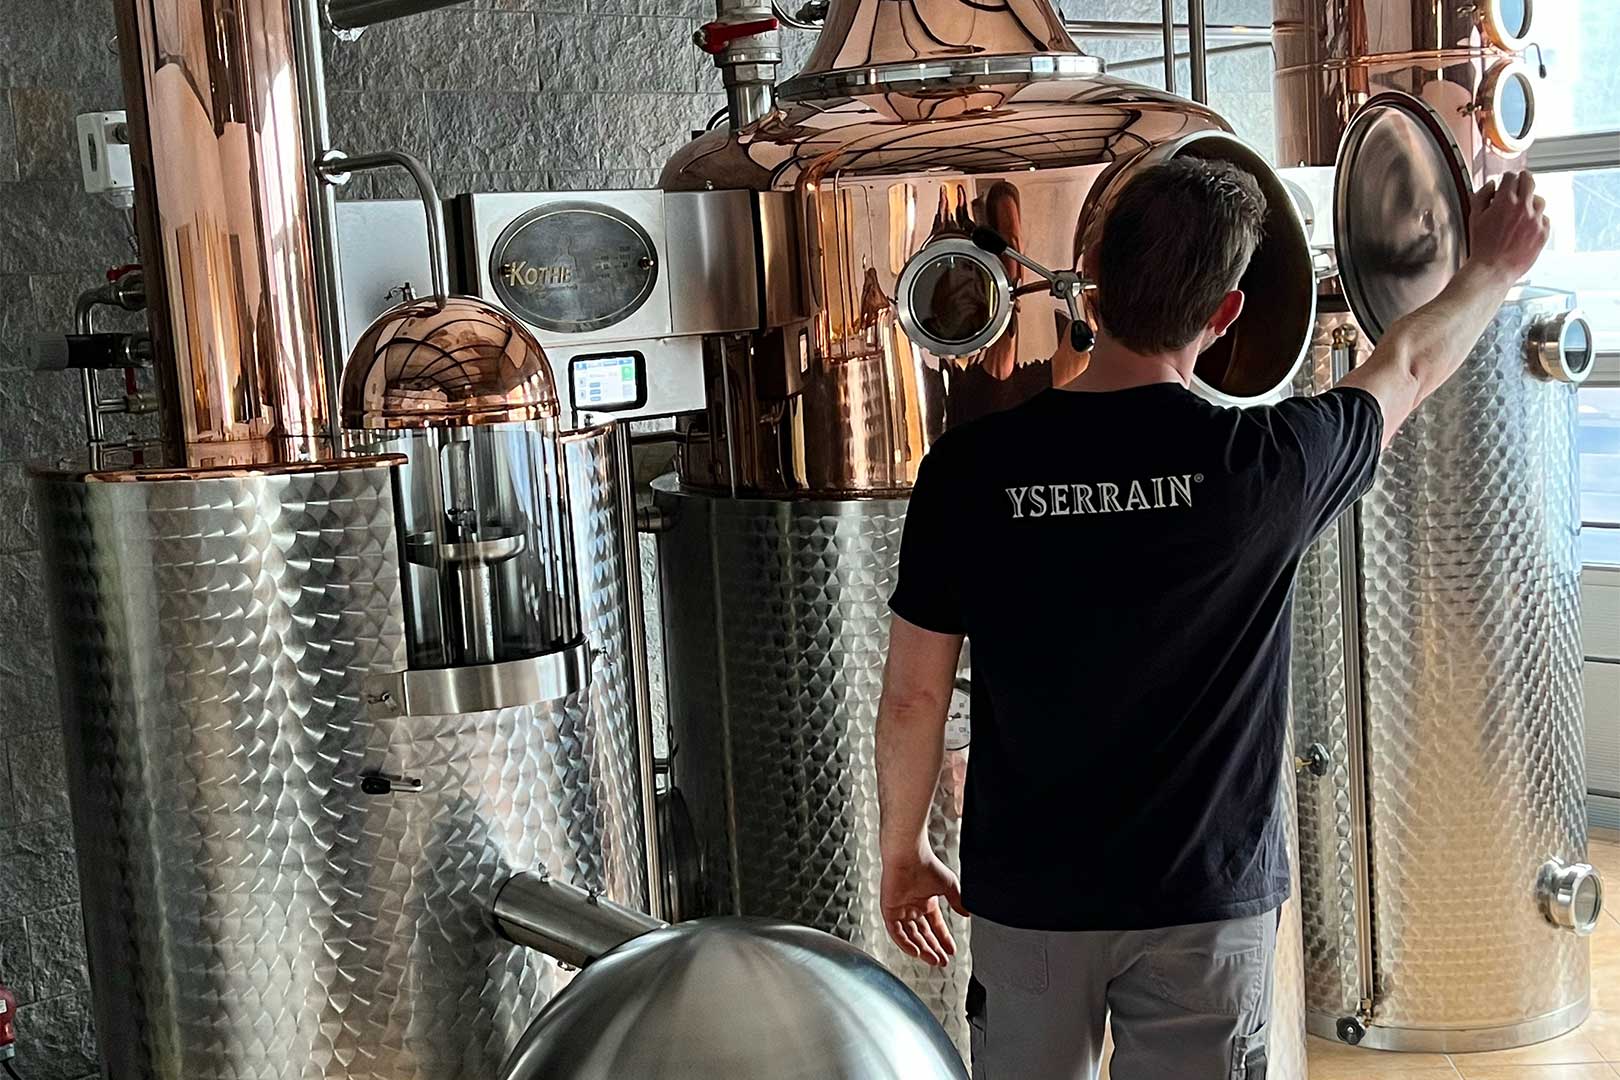 whisky brennerei yserrain® distillery ismaning WEB 3 2 1620x1080 uvwxmyktnilg